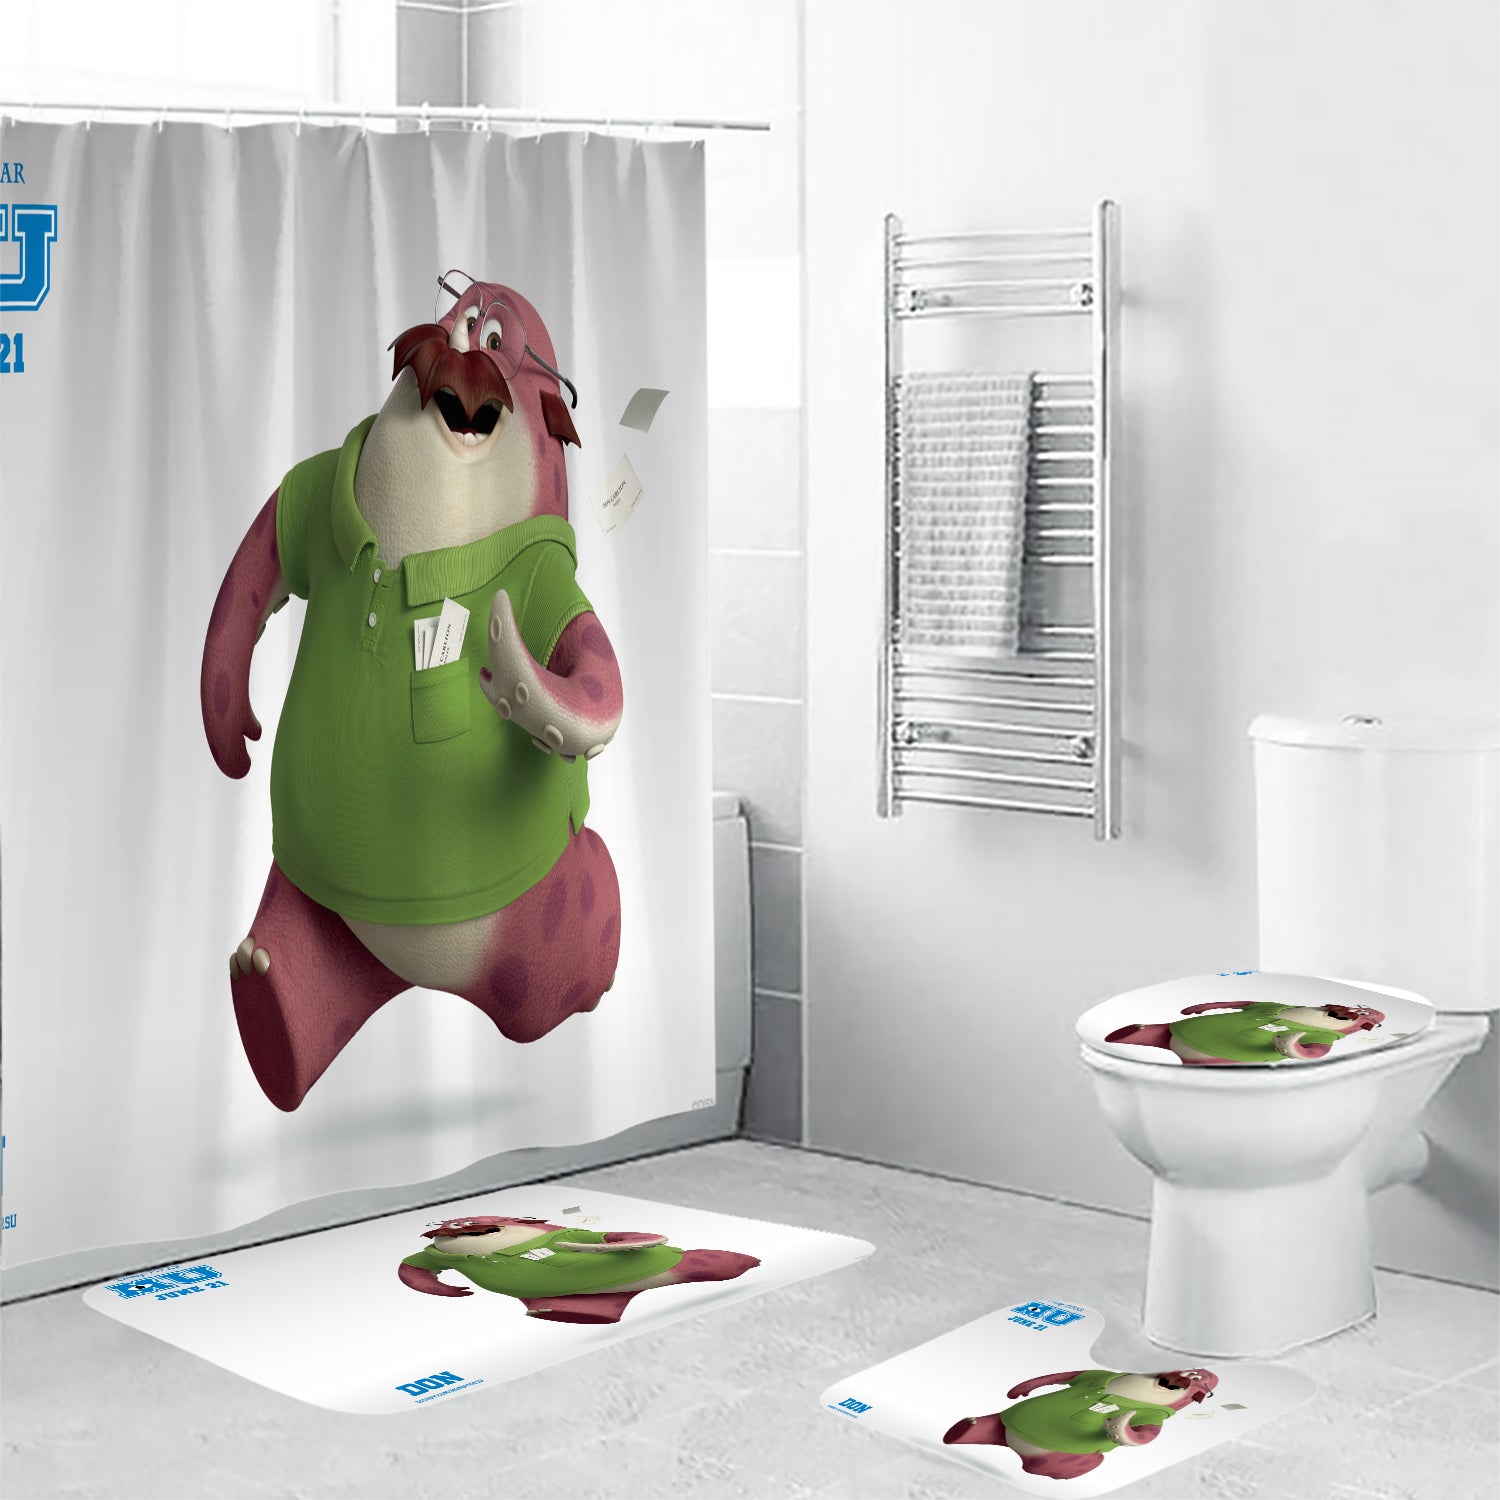 Characters Don Monsters Inc Monsters University Movie Disney Pixar Waterproof Shower Curtain Non-Slip Toilet Lid Cover Bath Mat - Bathroom Set